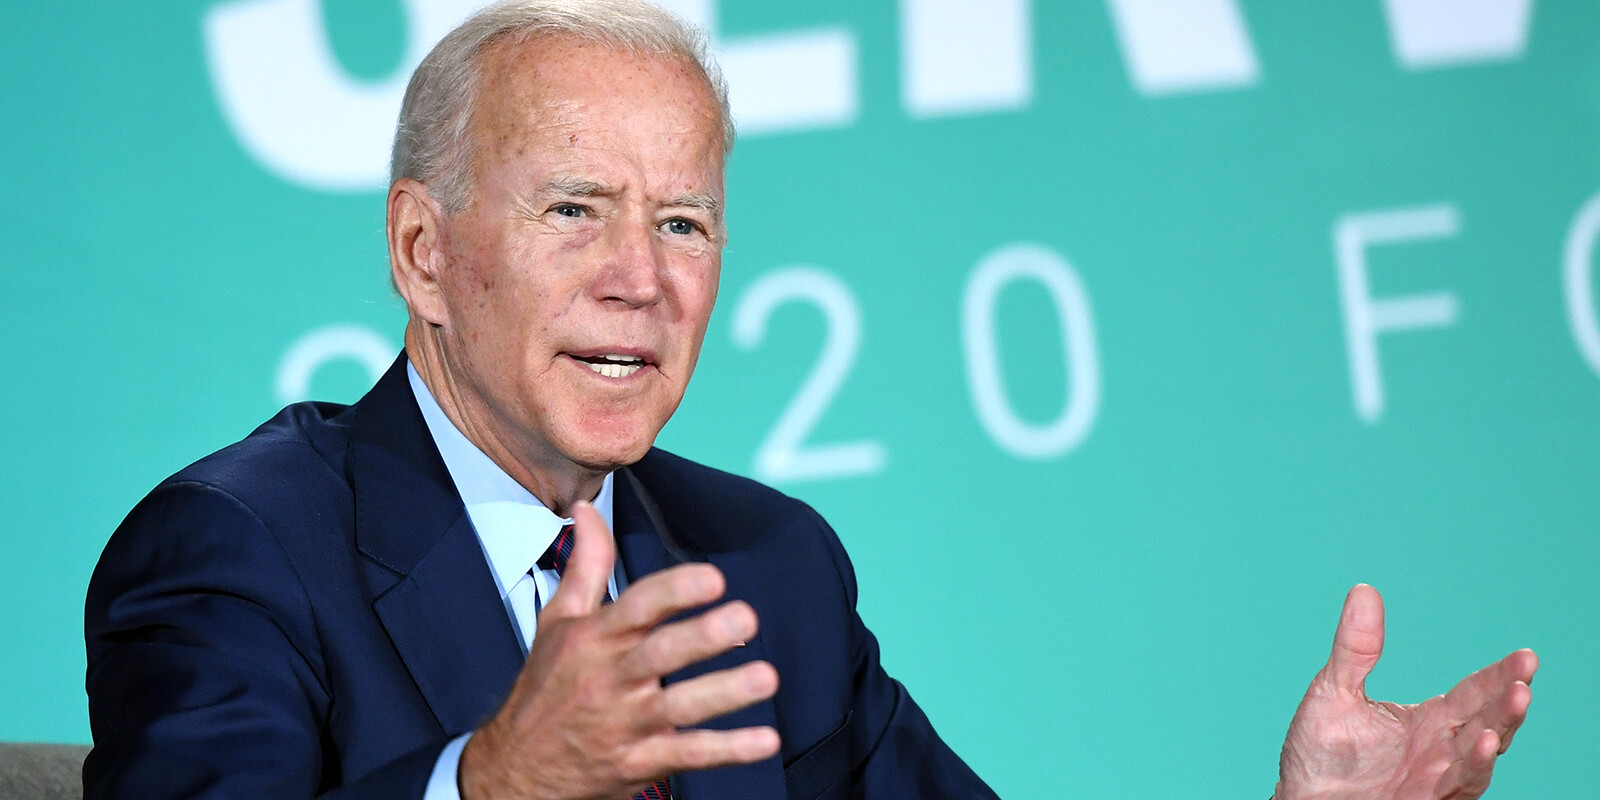 Joe Biden’s economic leadership is inspiring AFSCME members to vote